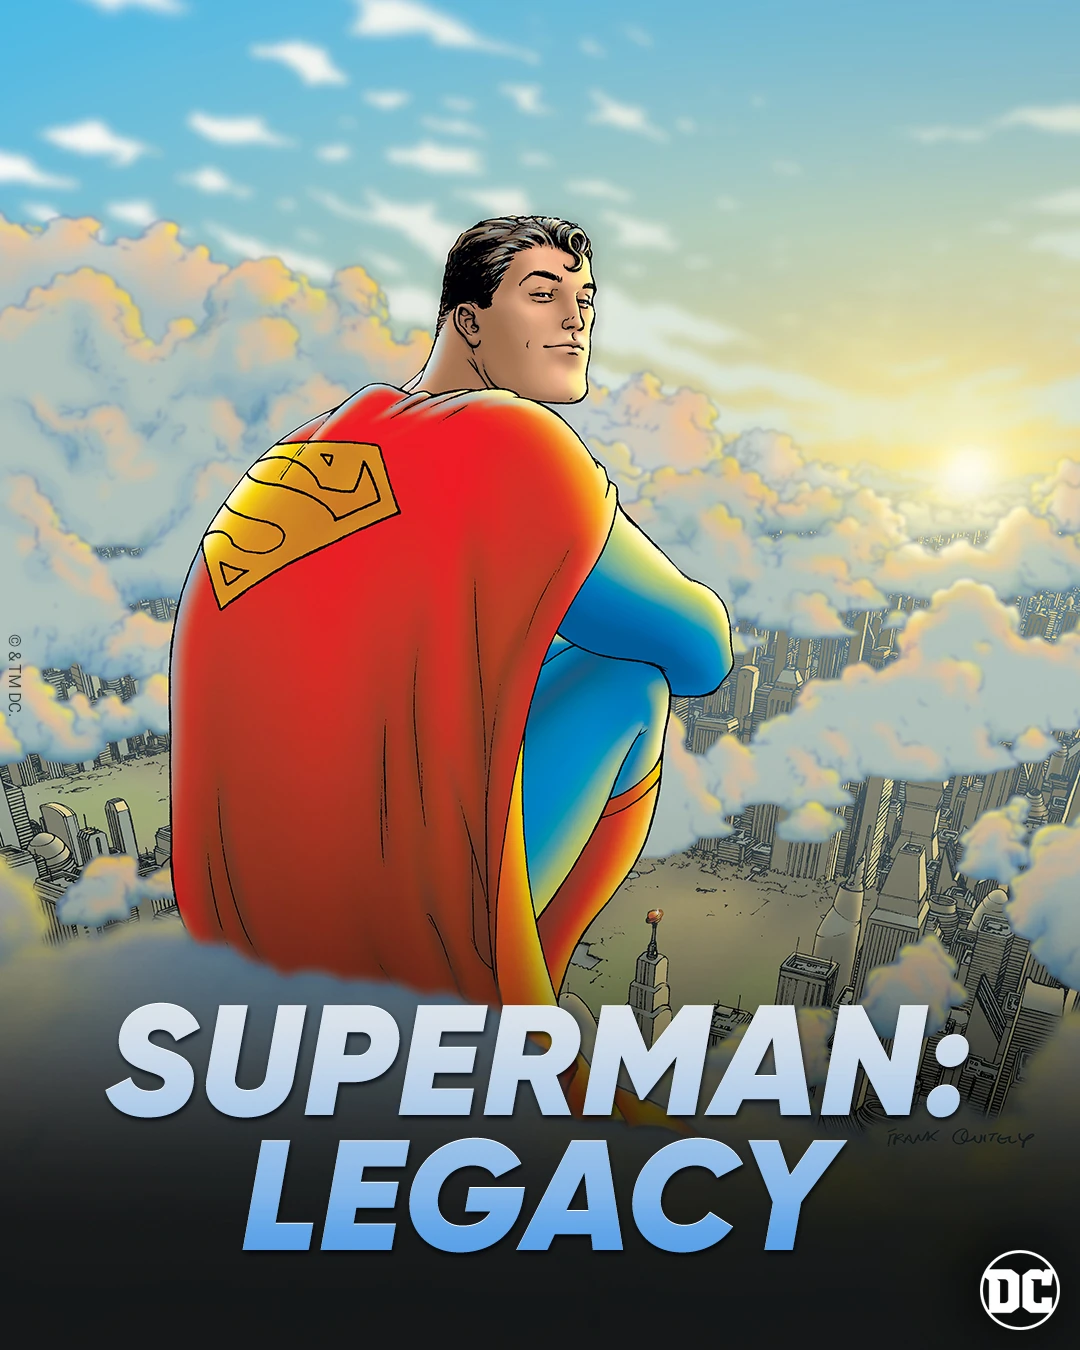 Superman: Legacy regista